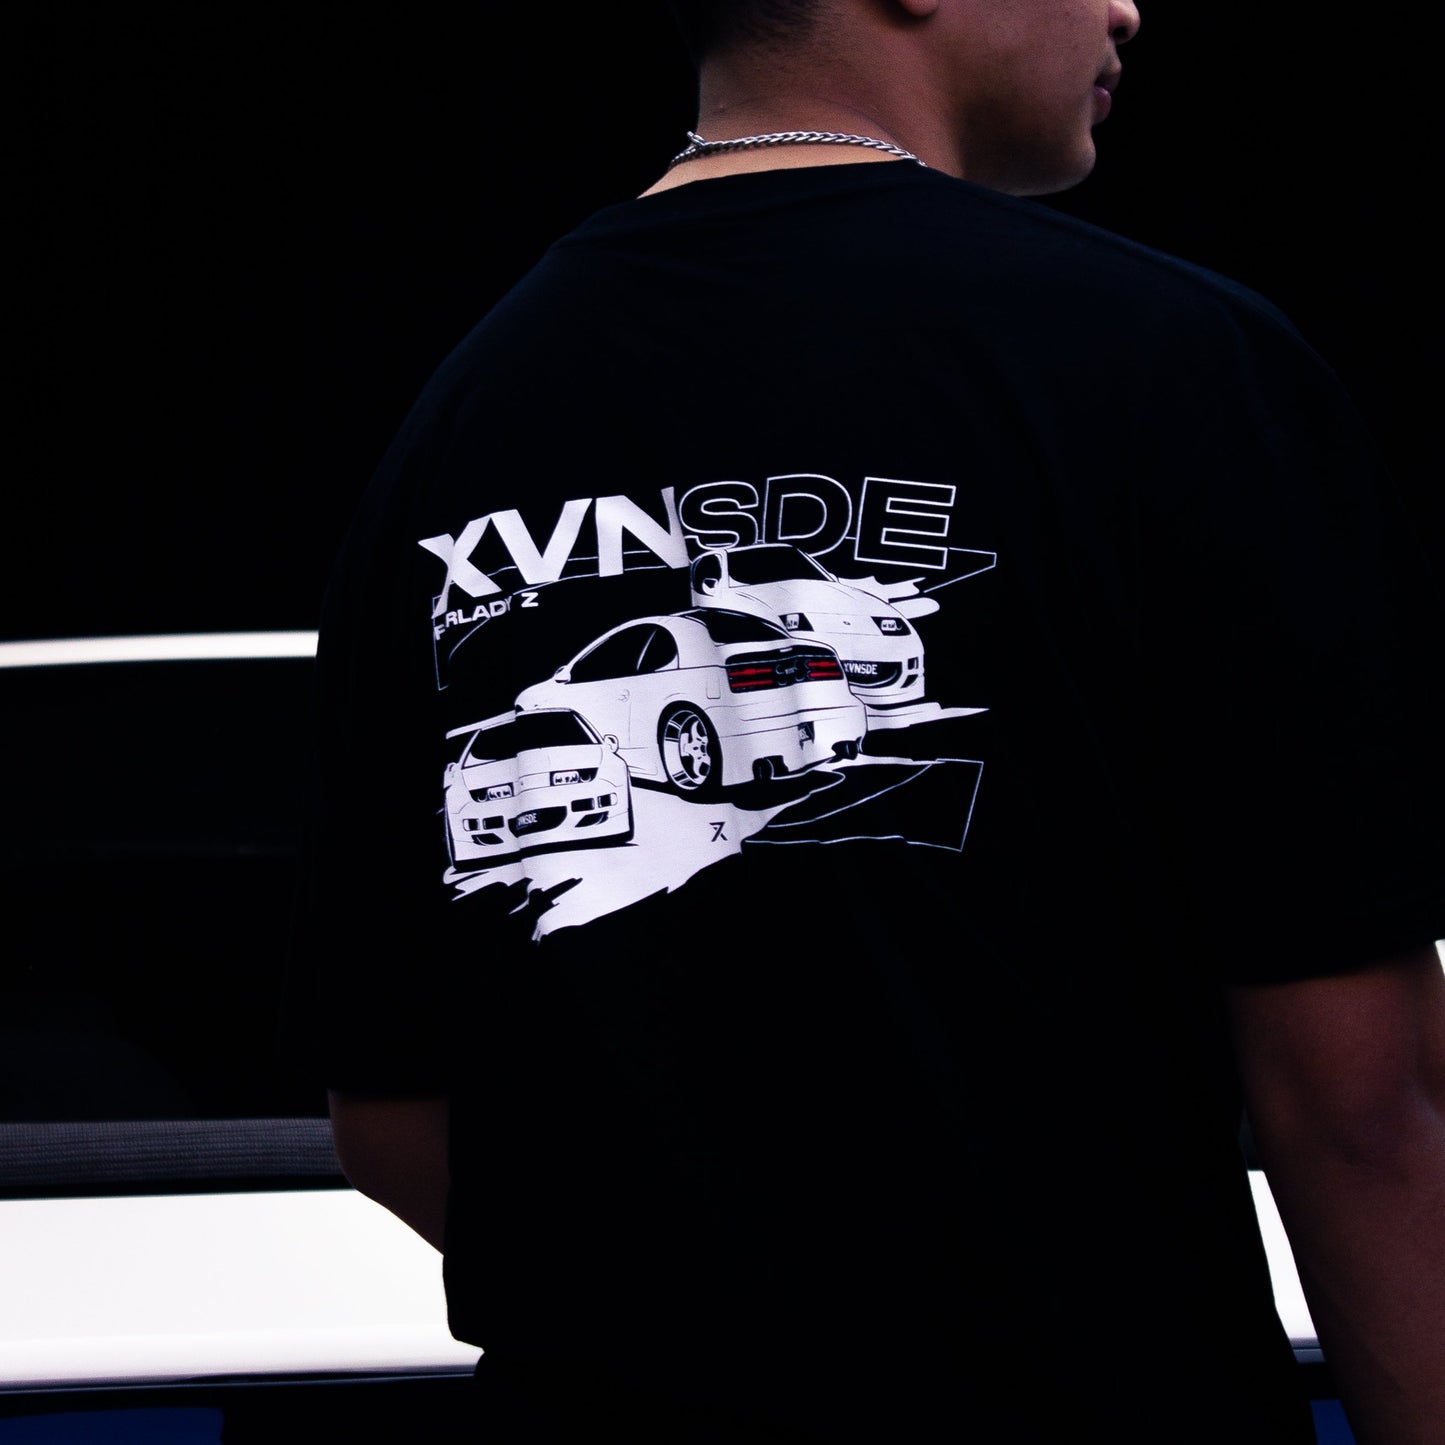 XVNSDE T-shirt